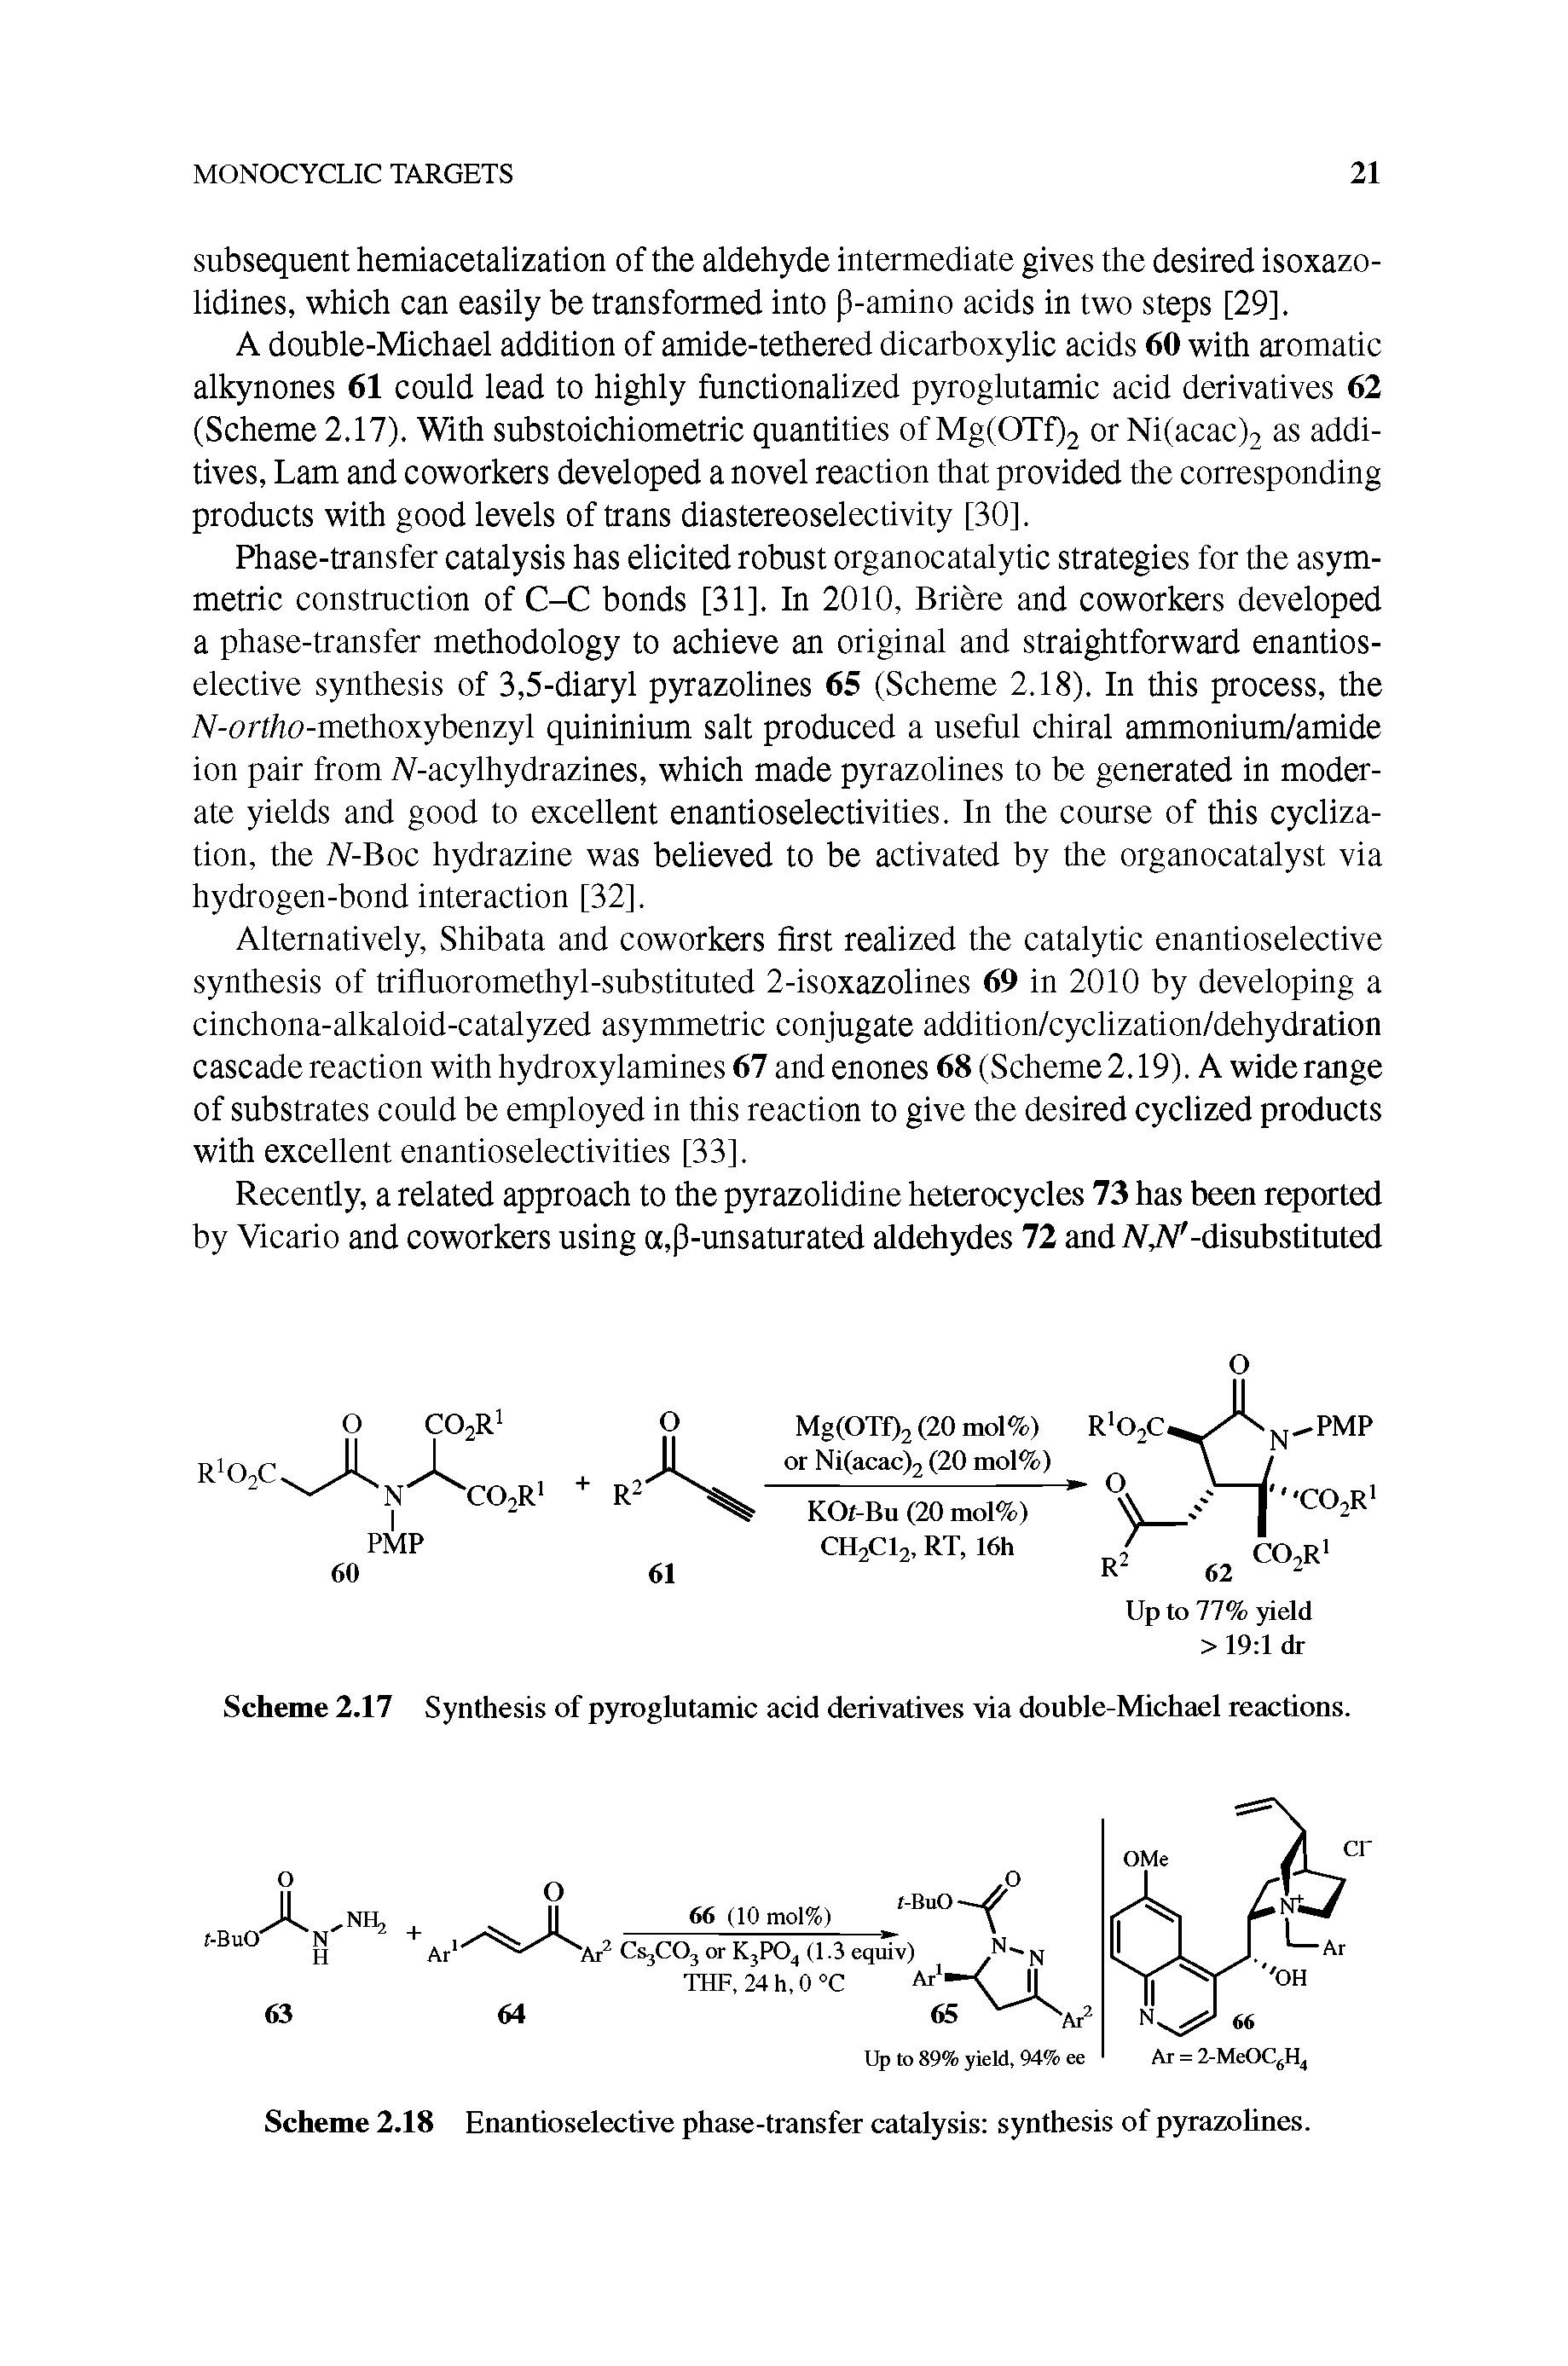 Scheme 2.17 Synthesis of pyroglutamic acid derivatives via double-Michael reactions.